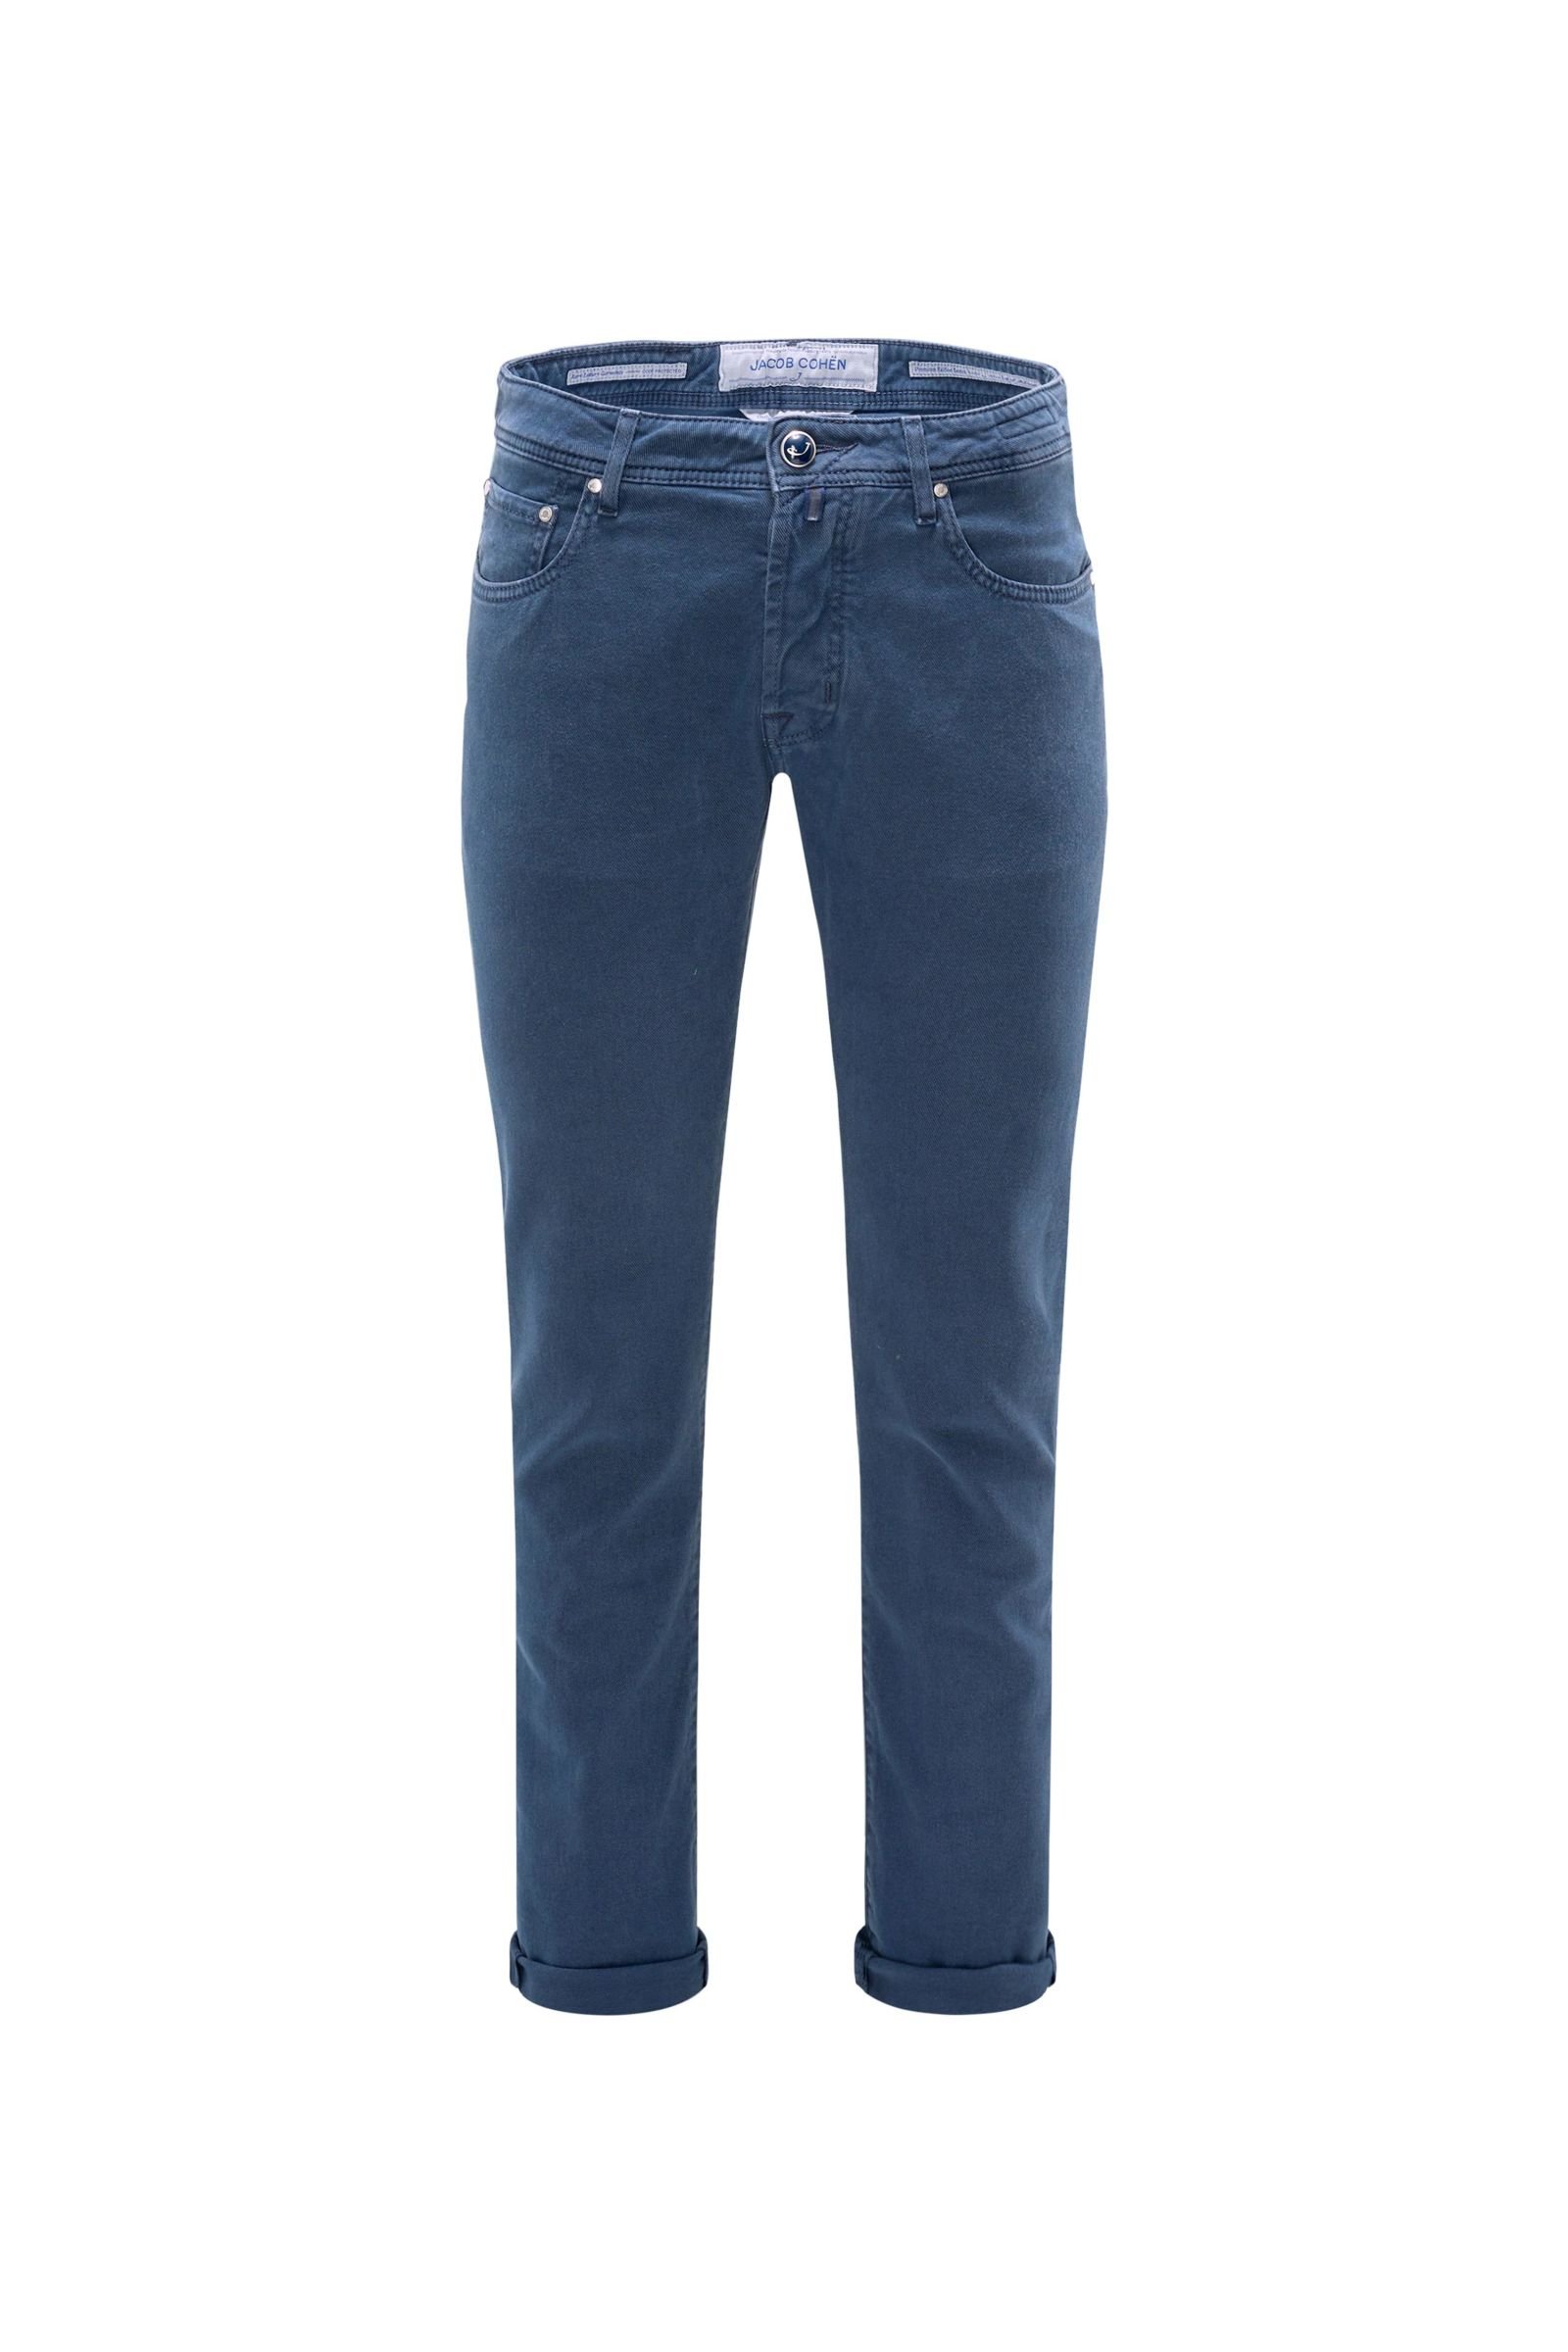 Cotton trousers 'J688 Comfort Slim Fit' navy